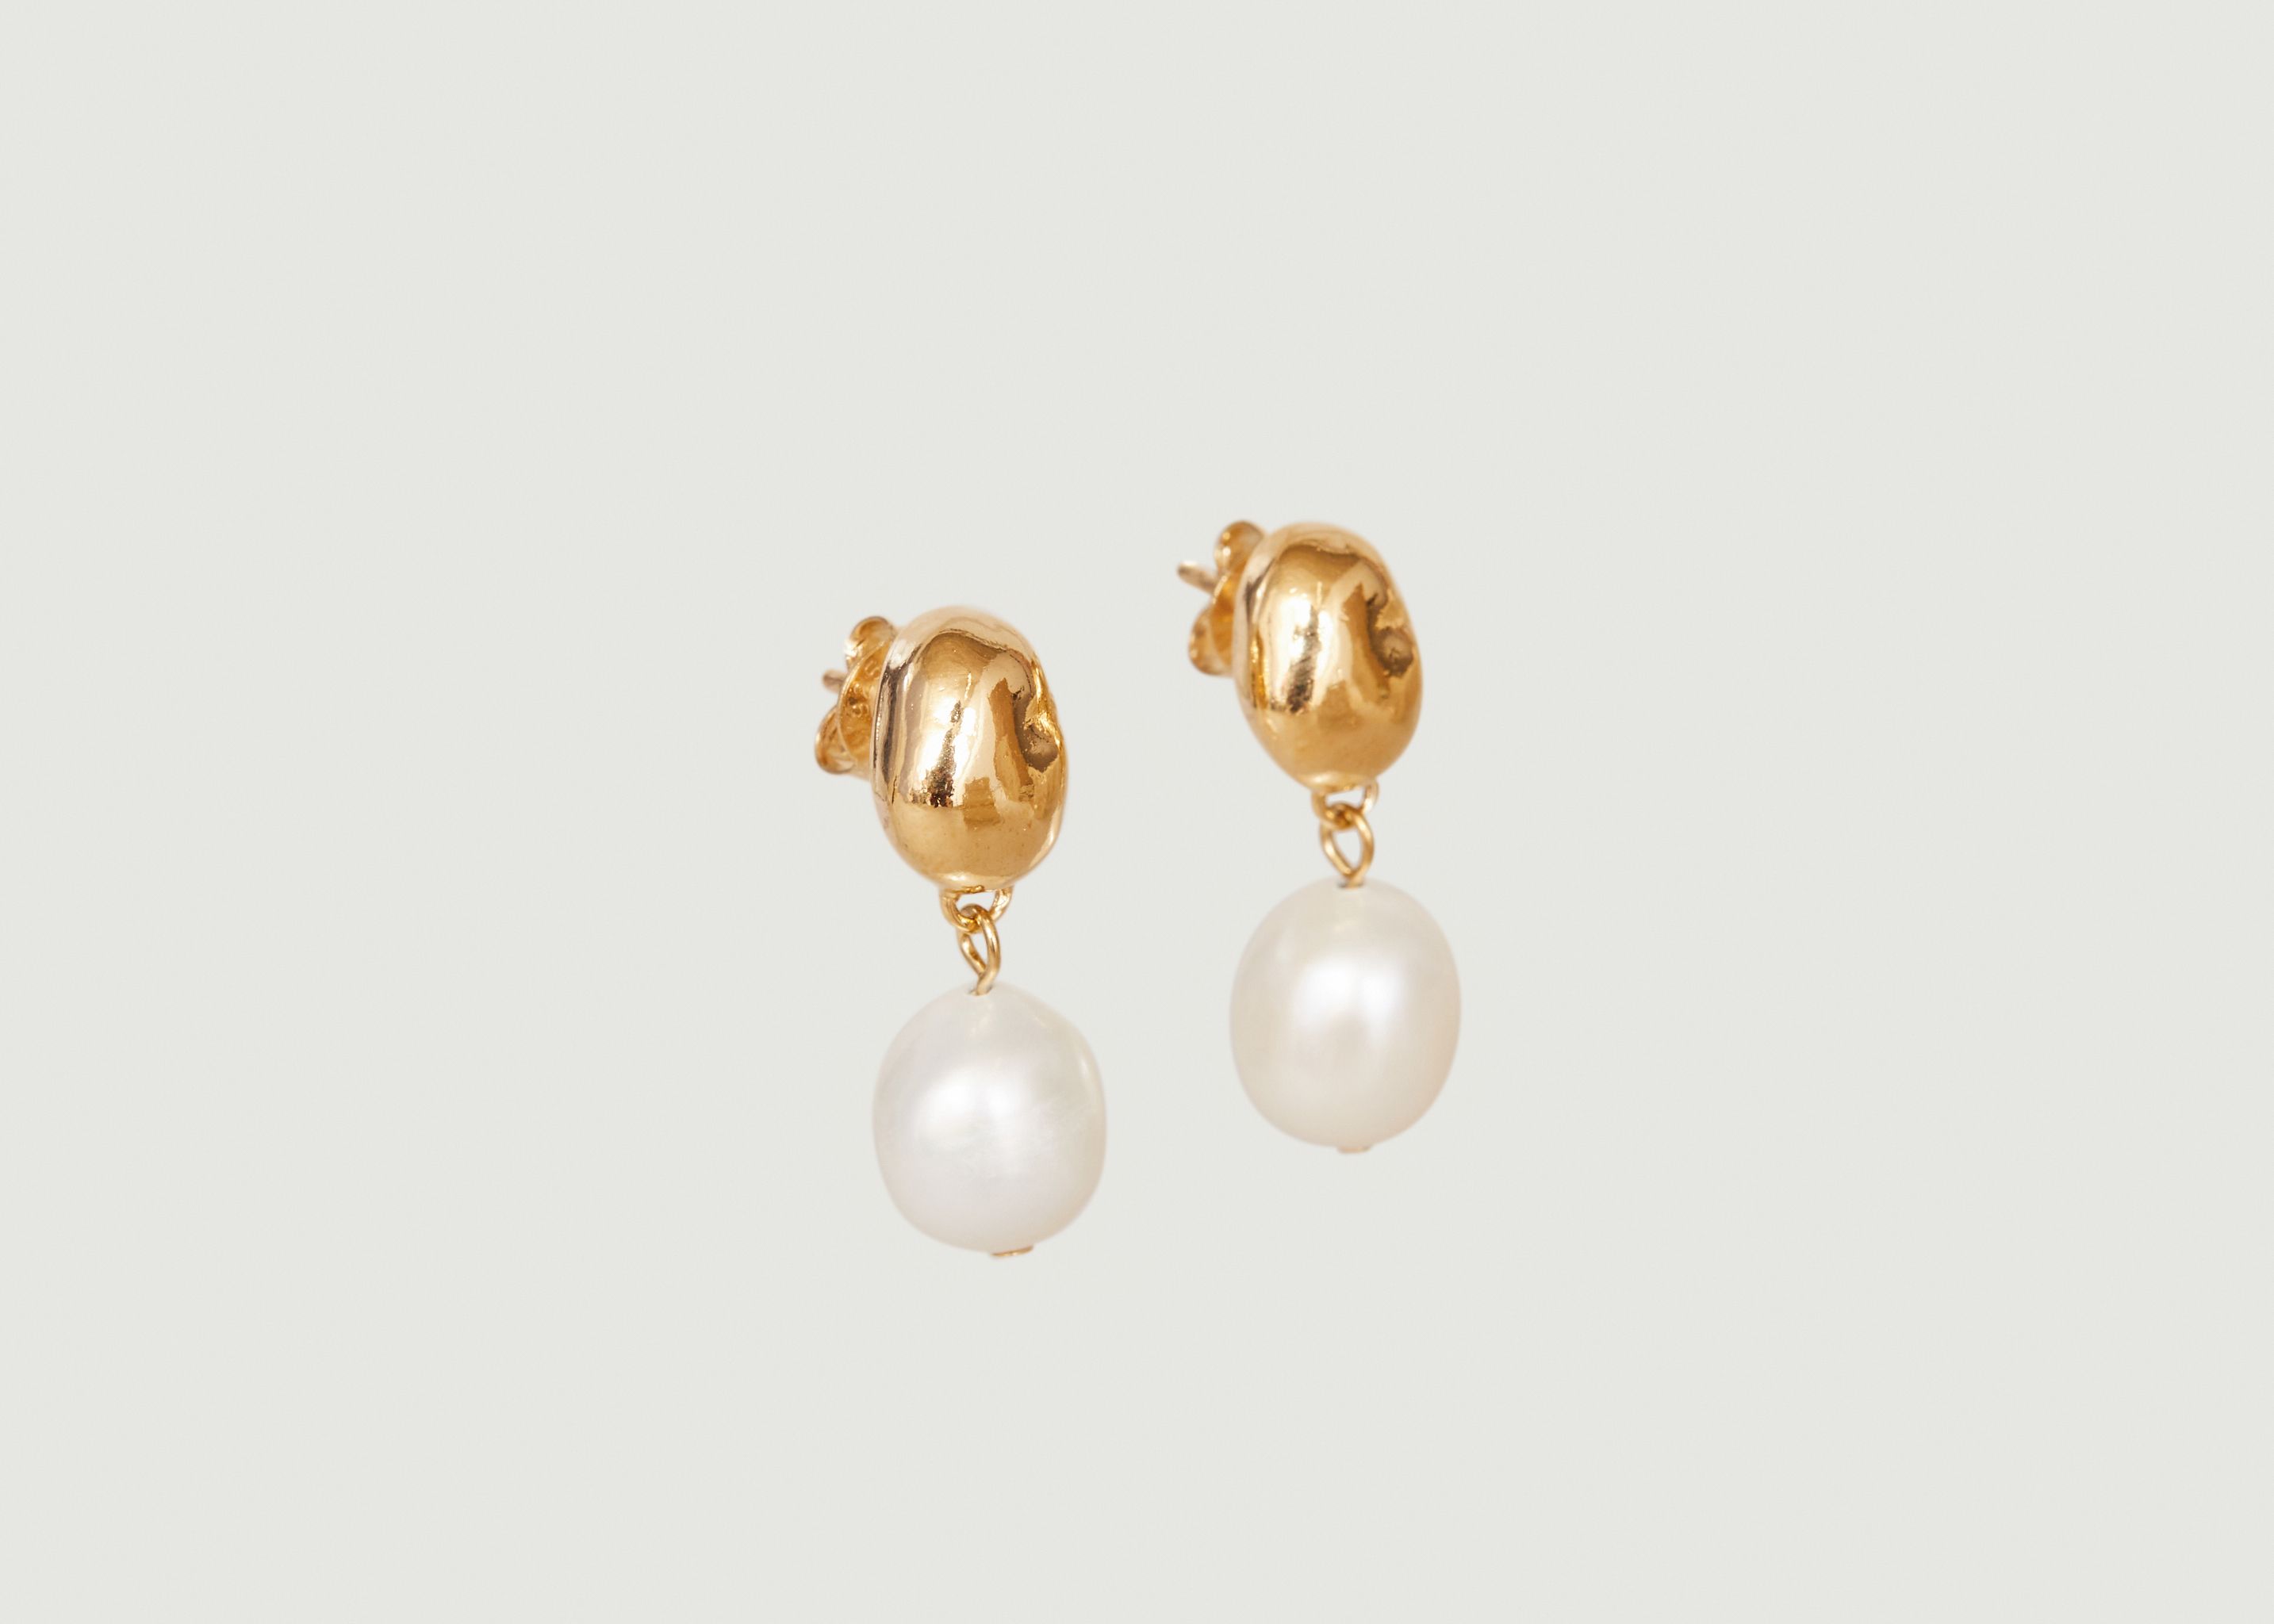 Lise dangling earrings with pearls - Louise Damas